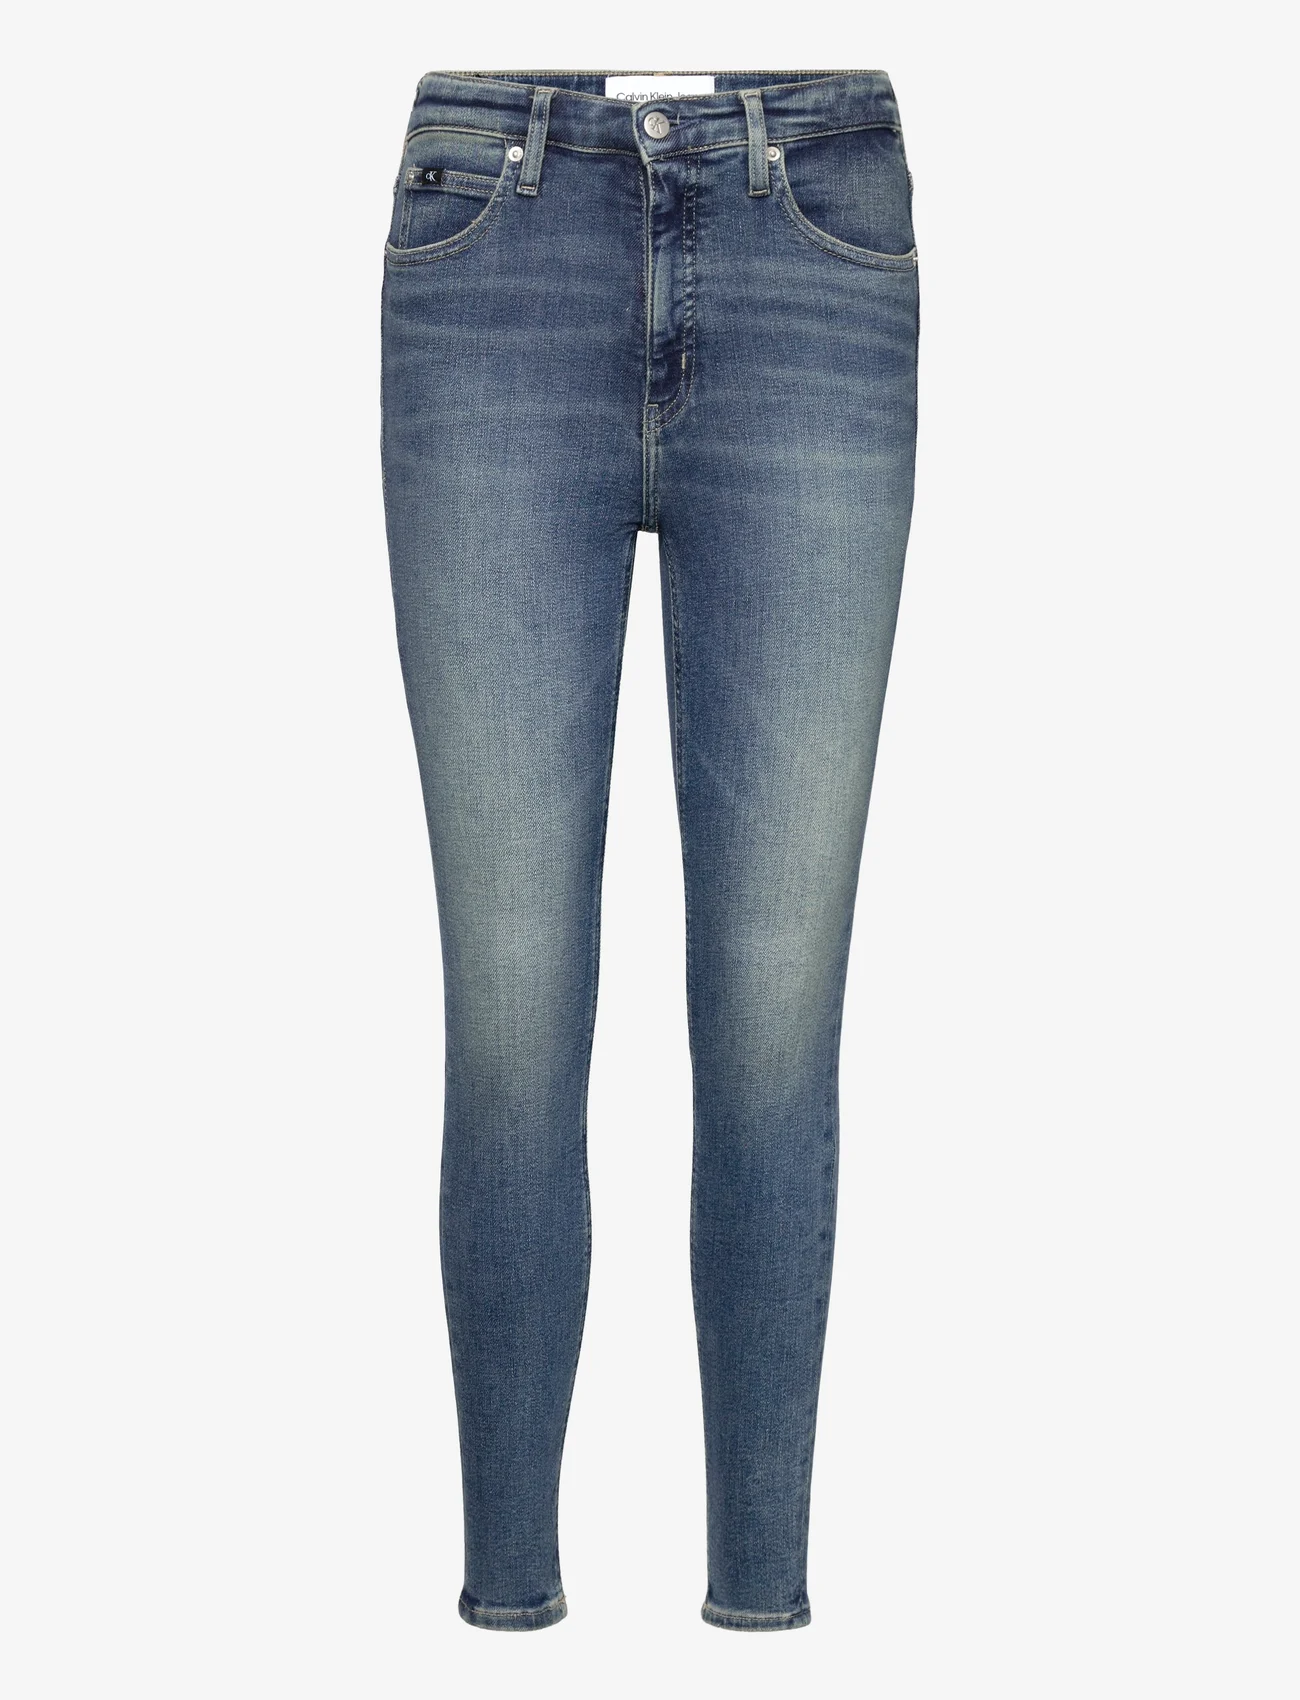 Calvin Klein Jeans - HIGH RISE SUPER SKINNY ANKLE - skinny jeans - denim medium - 0